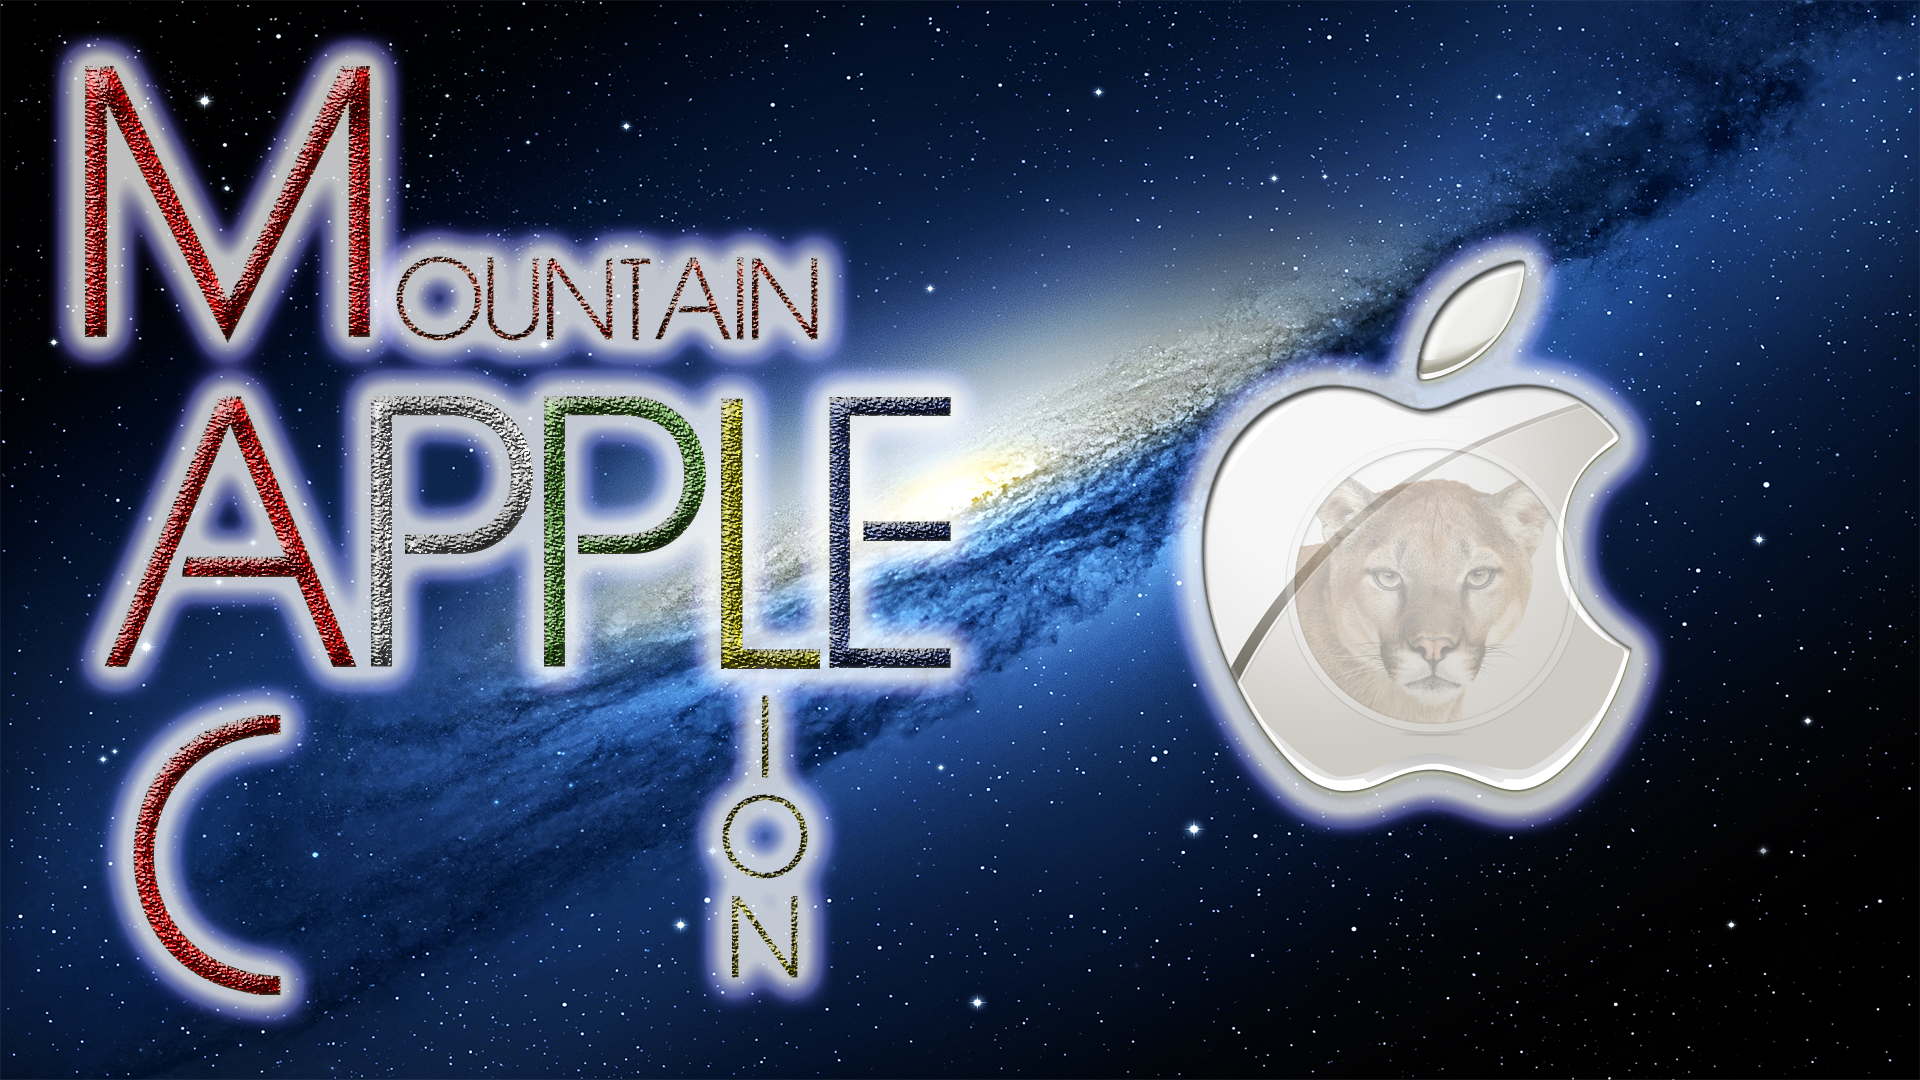 Mac OS X Mountain Lion Wallpaper by Demeter-Szabolcs on DeviantArt